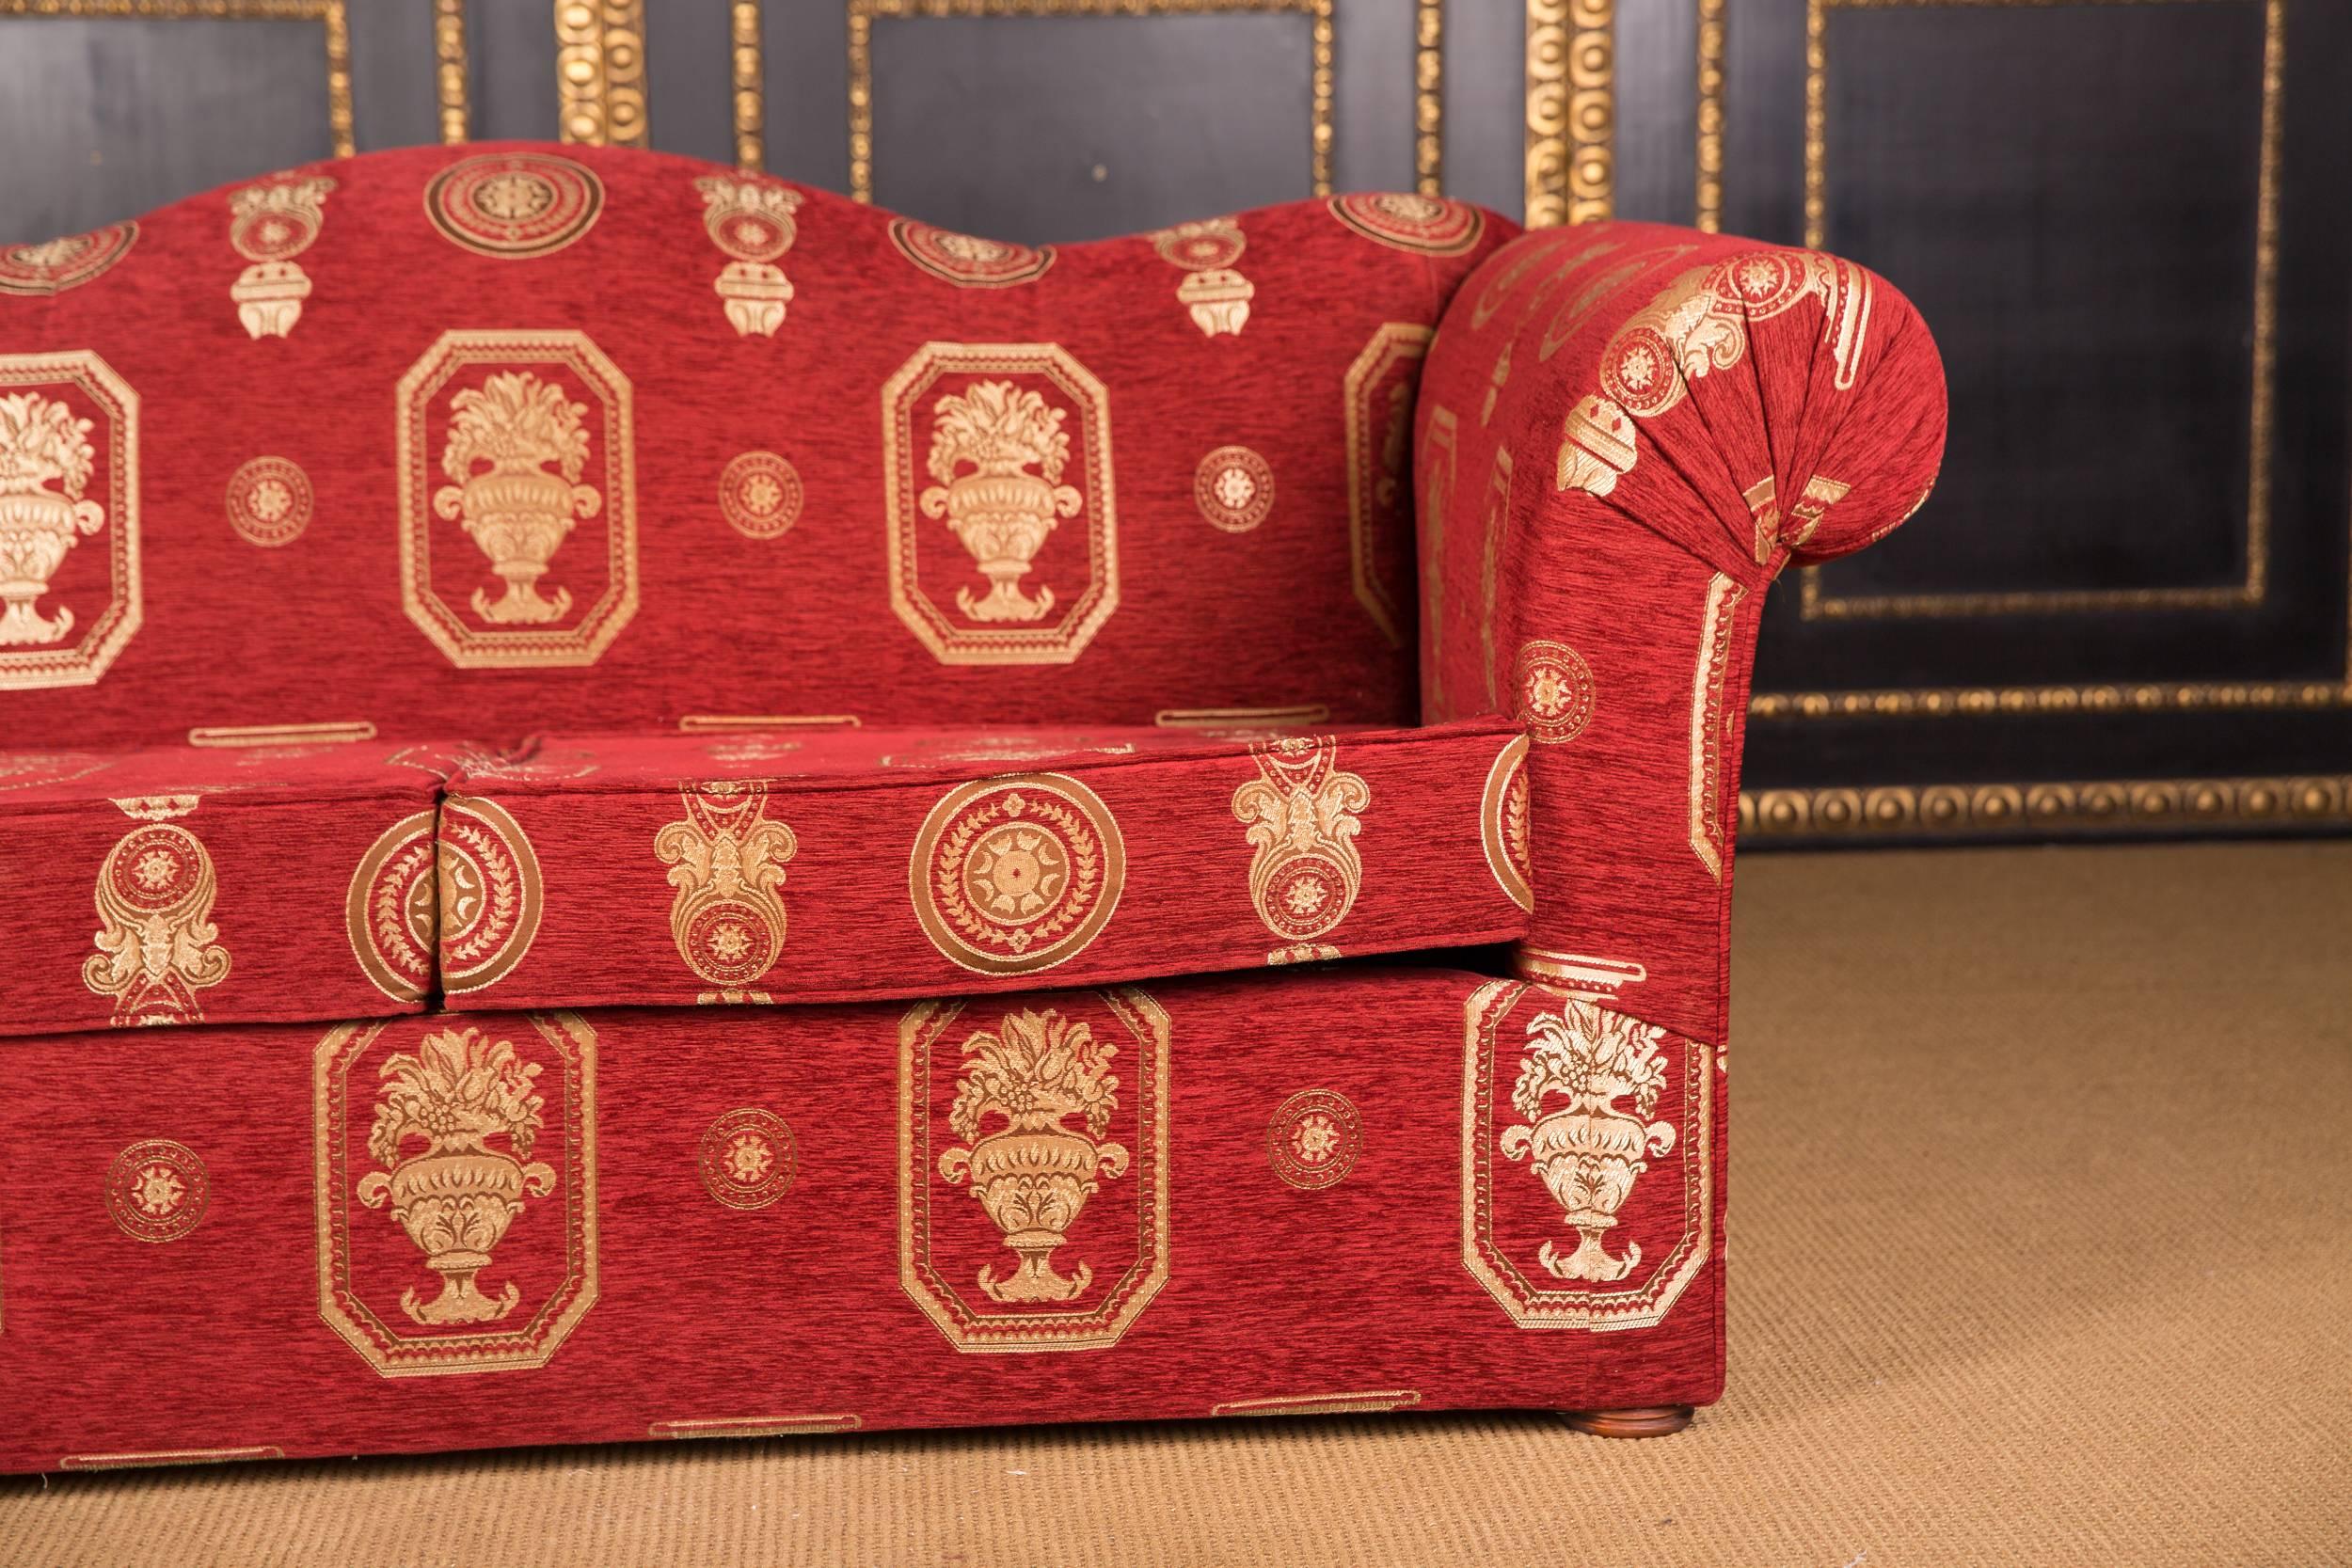 20th Century High Quality Original Club Sofa Two-Seat in English Style